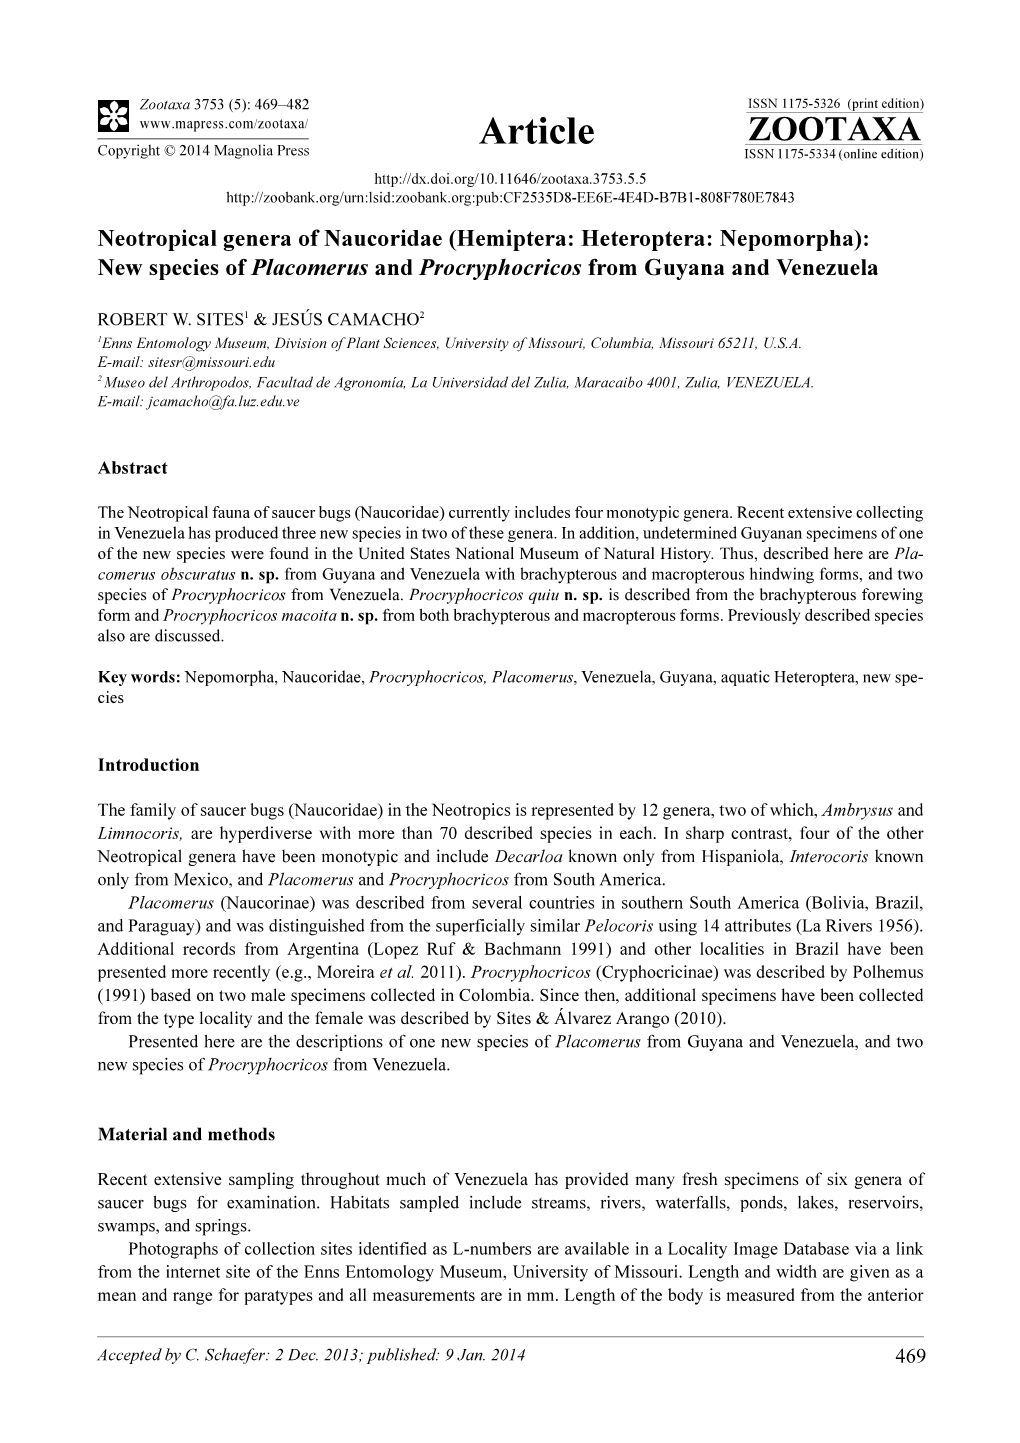 Hemiptera: Heteroptera: Nepomorpha): New Species of Placomerus and Procryphocricos from Guyana and Venezuela